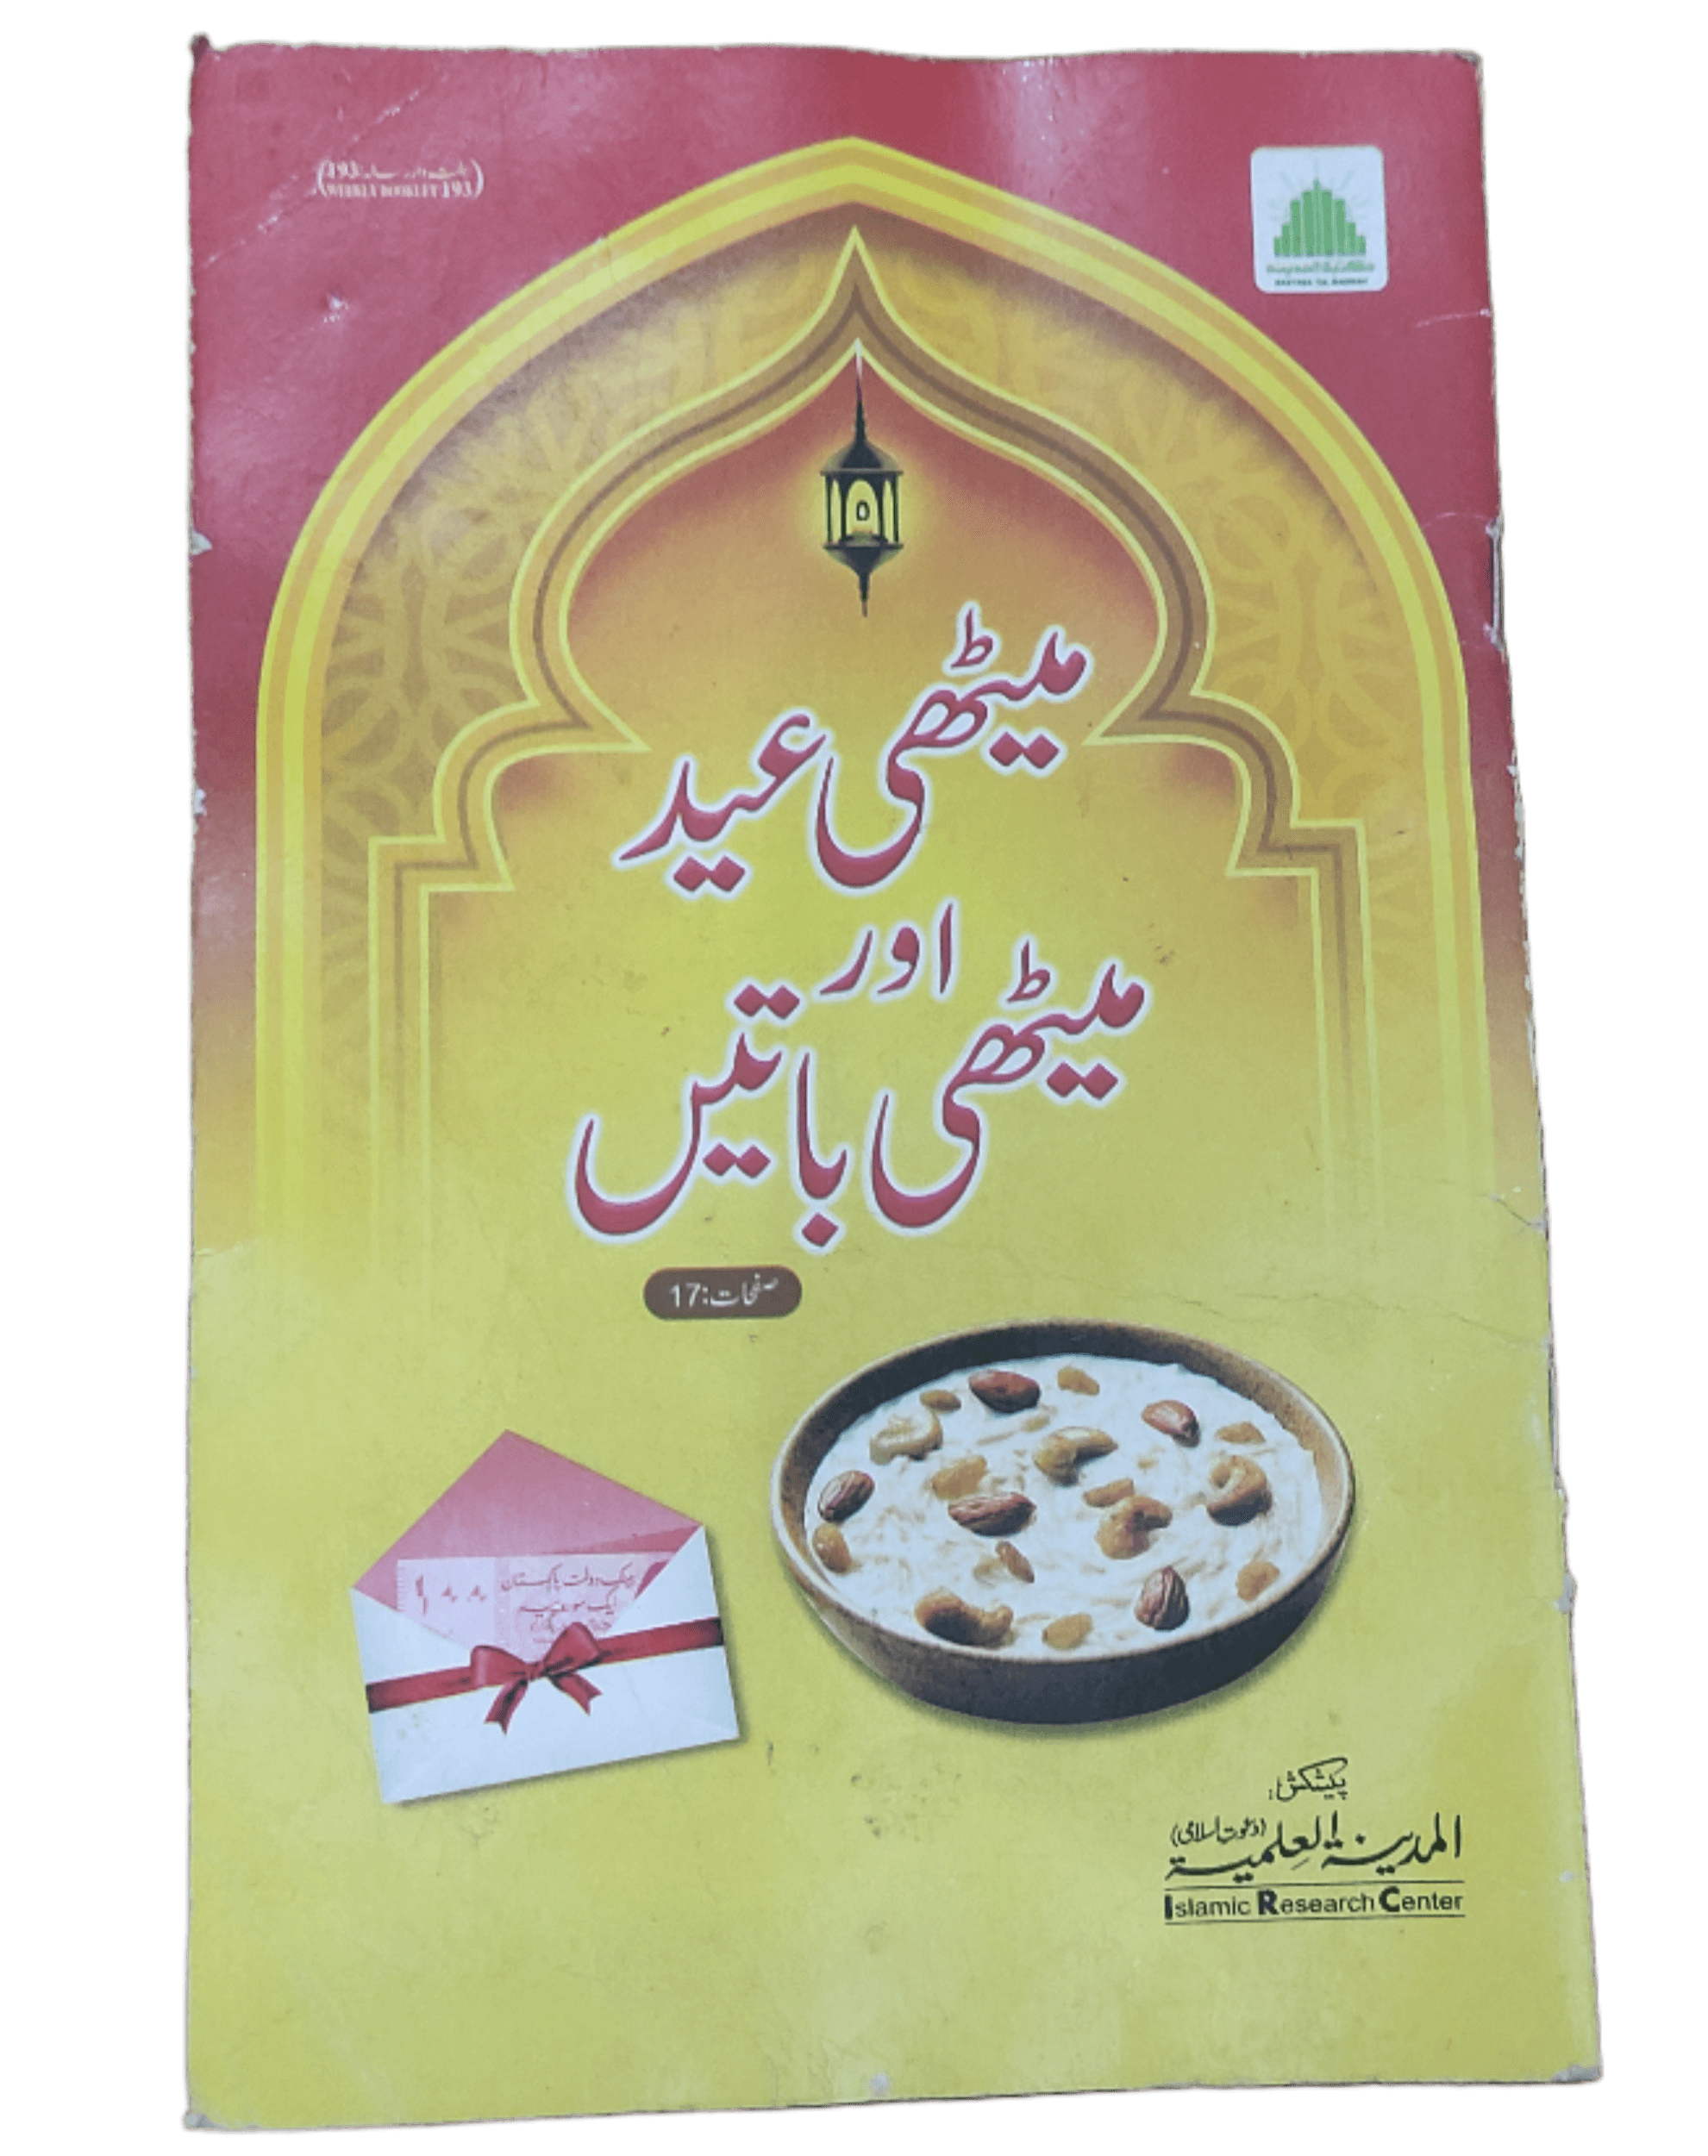 Meethi Eid Aur Meethi Batain (Sweet Eid and Sweet Conversations) - KHAJISTAN™